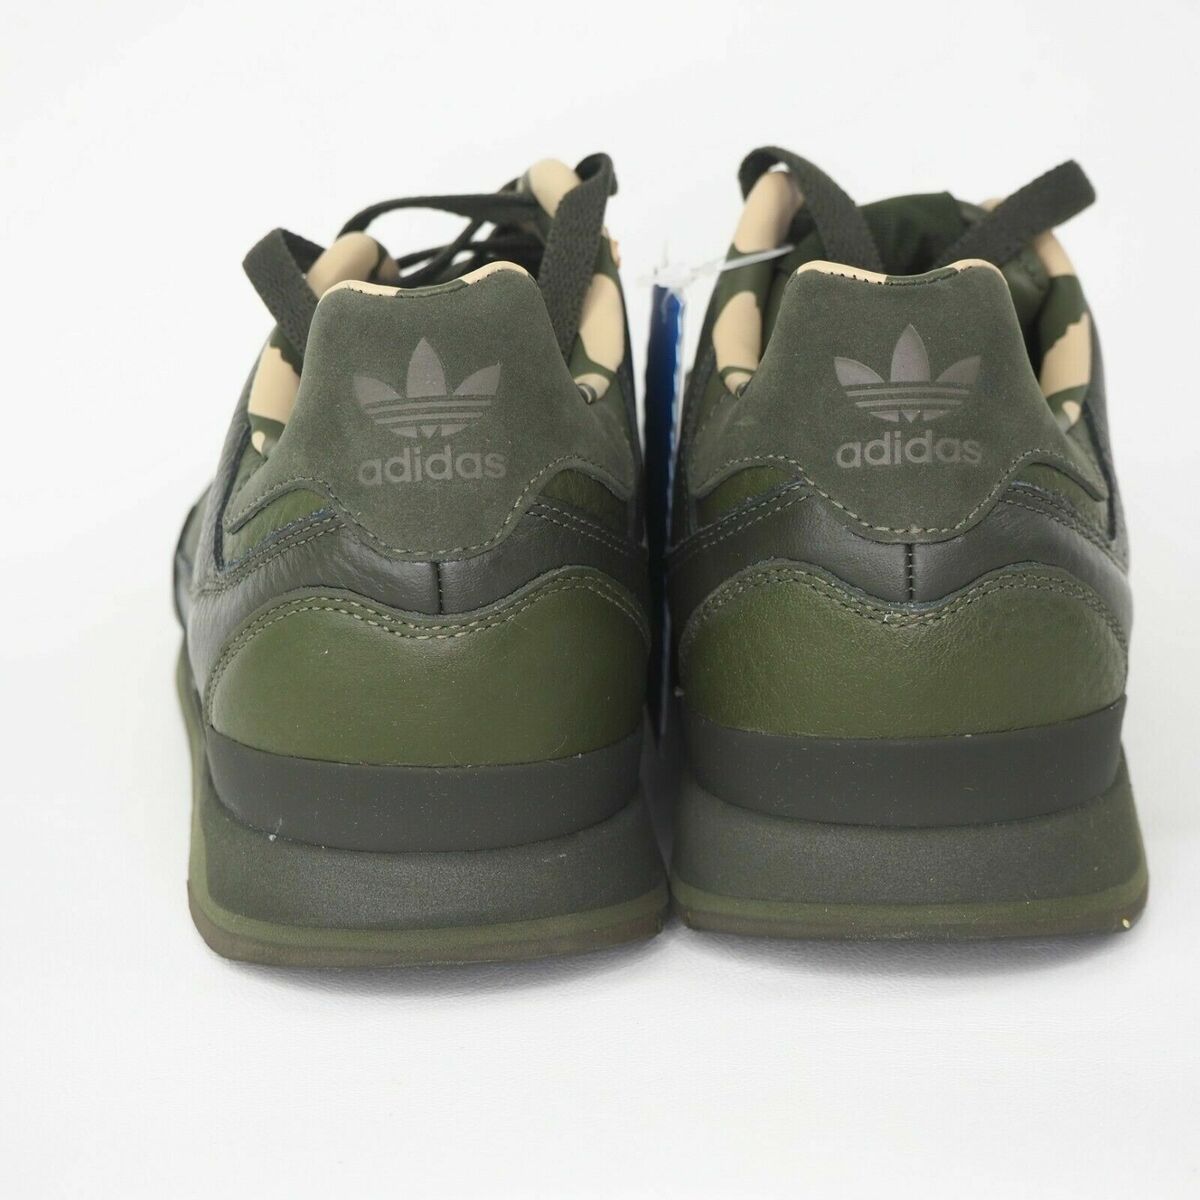 Adidas Boy's ZXZ LEA WLB J Shoes 014277 Athletic Sneaker Green Military Sz  5.5